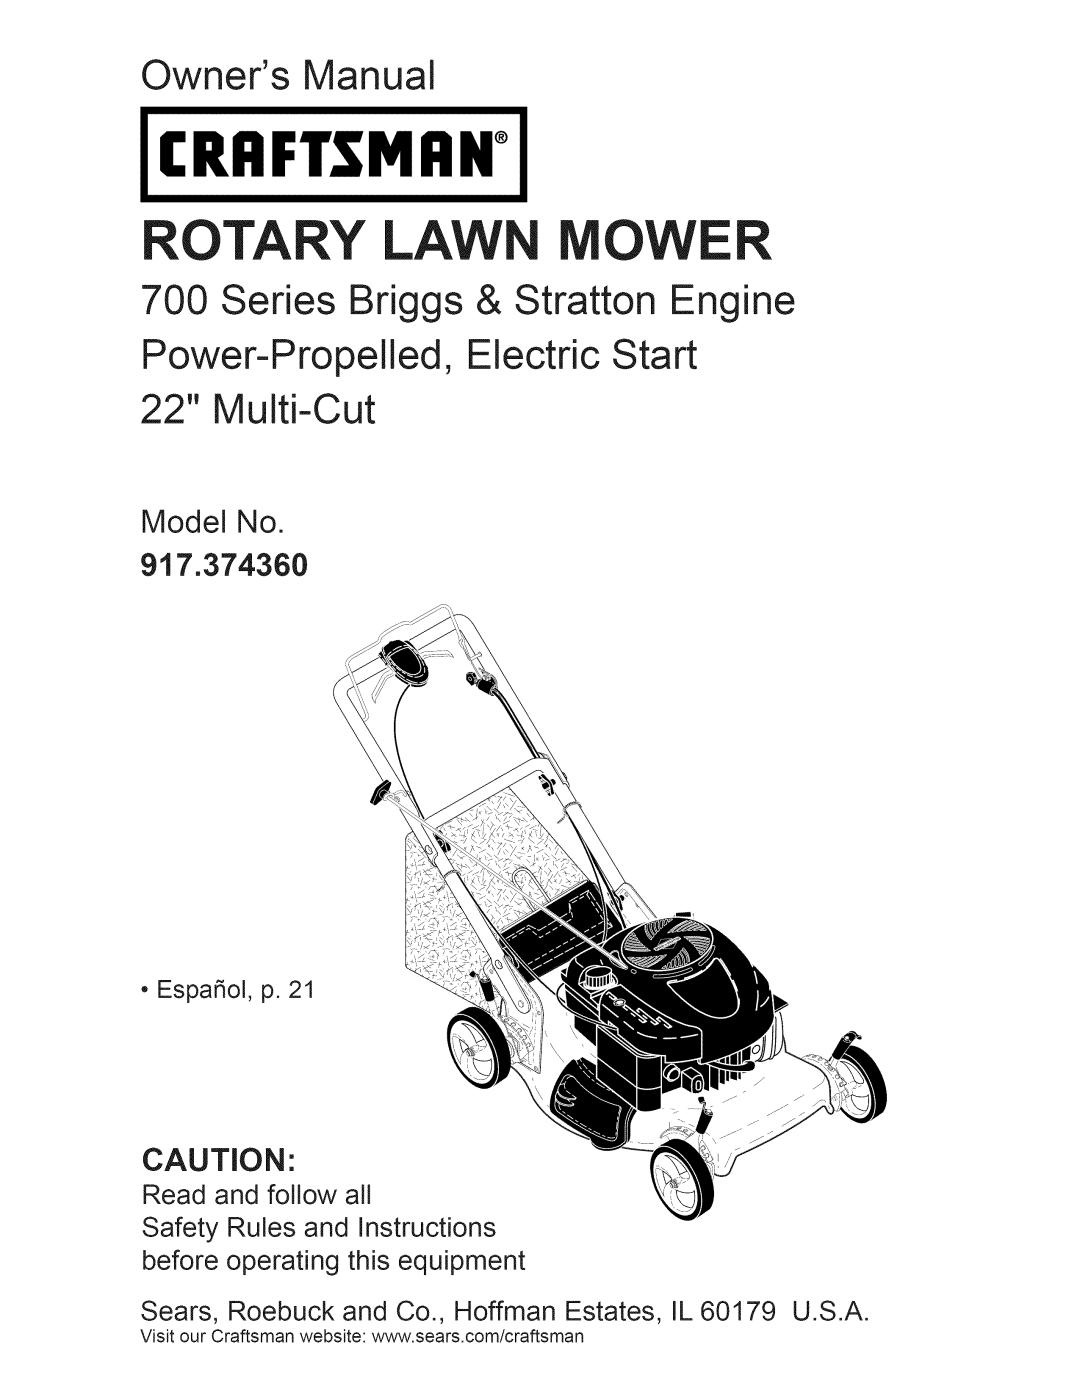 Craftsman owner manual Model No 917.374360, Craftsman, Rotary Lawn Mower, Owners Manual 